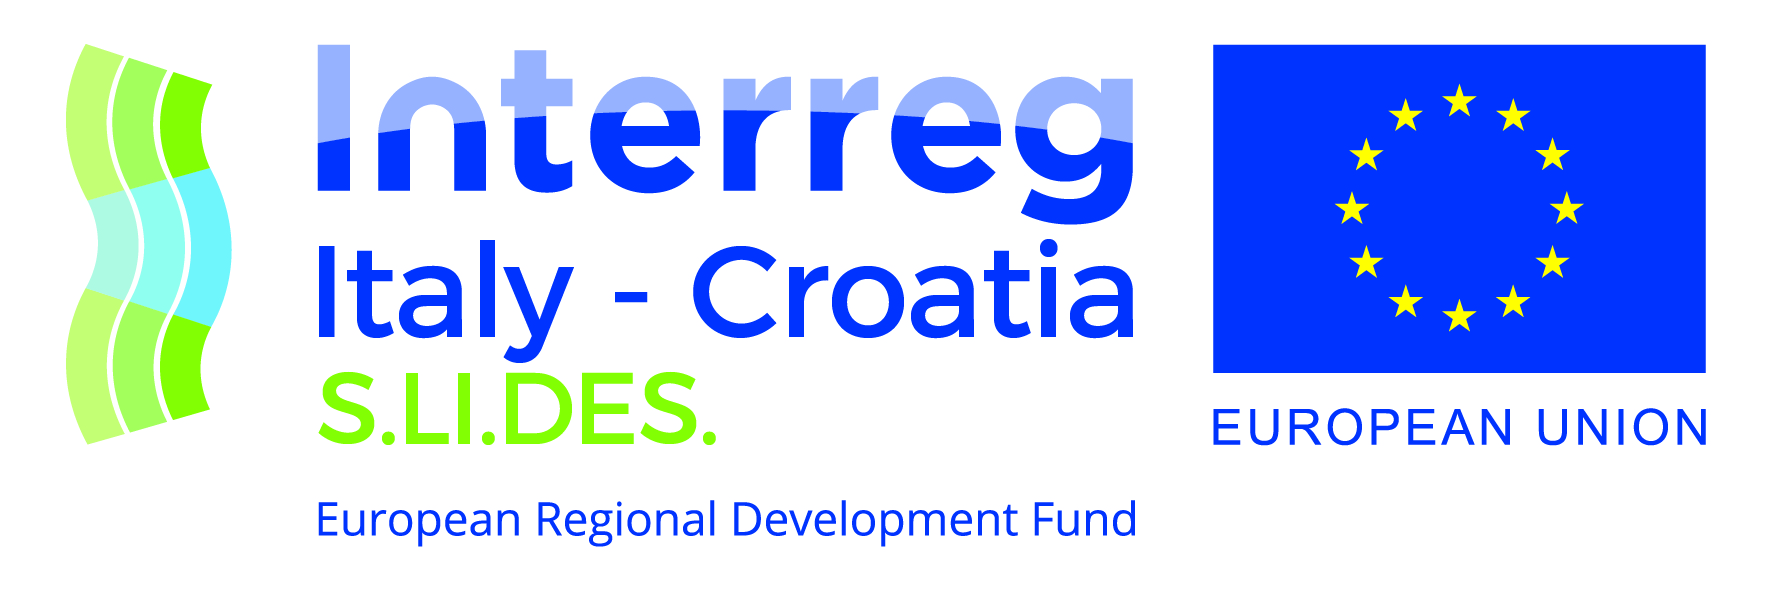 Logo Interreg Italy - Croatia S.LI.DES.